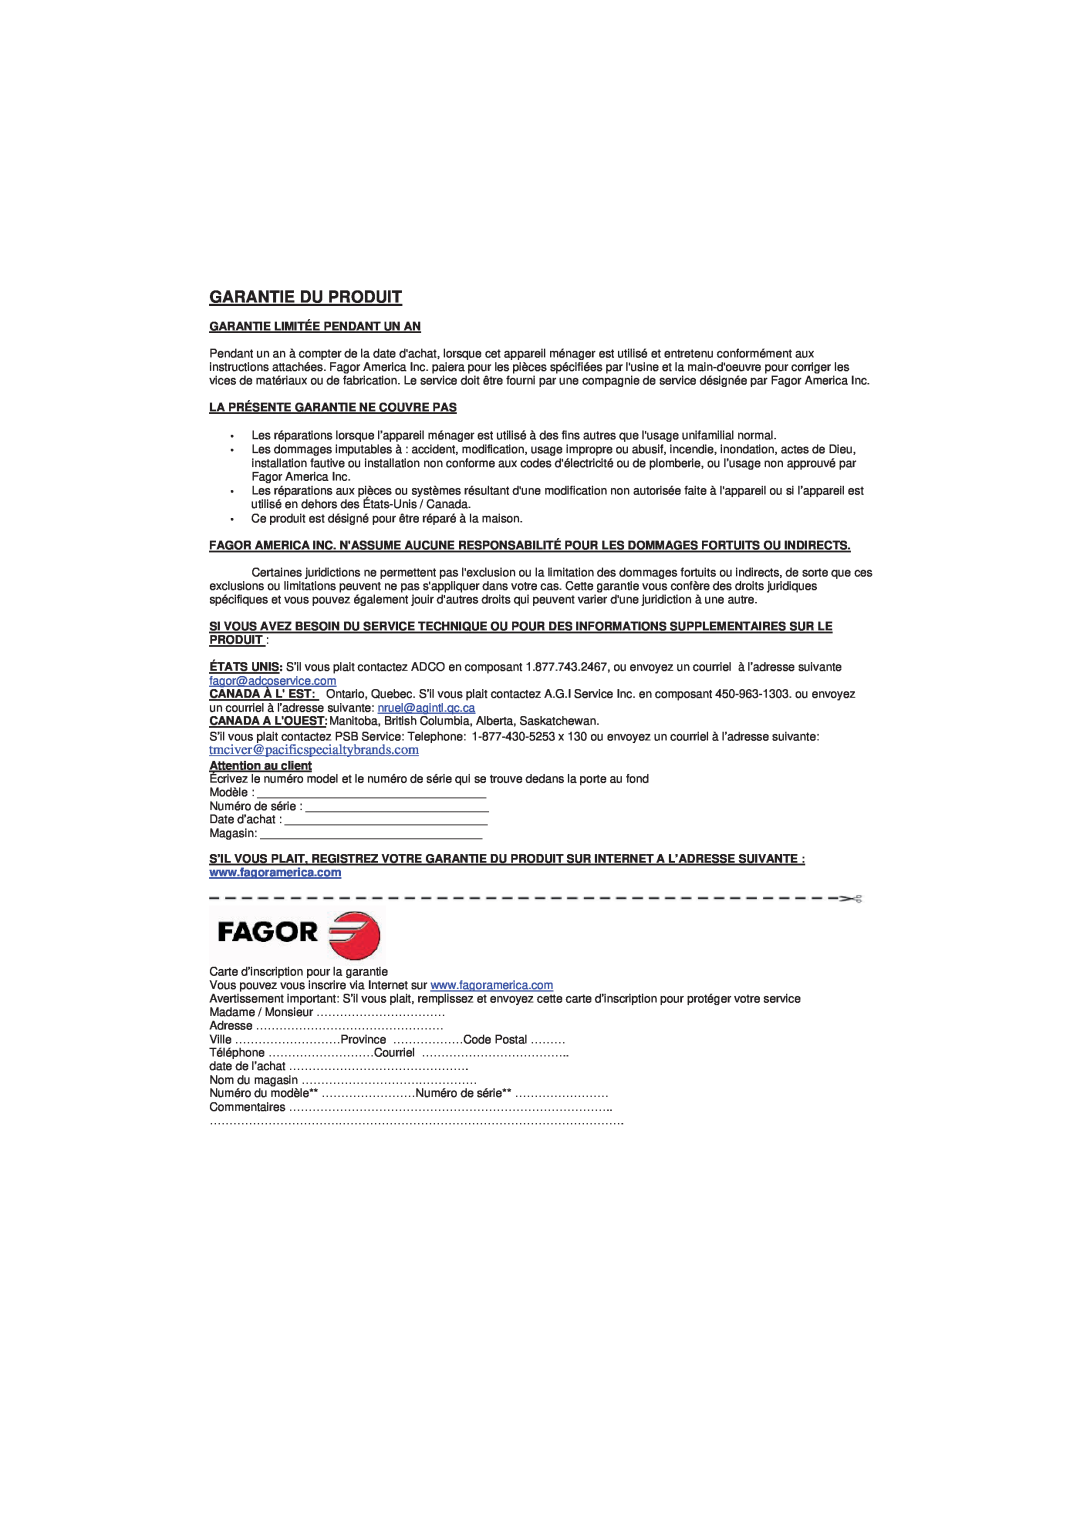 Fagor America 5HA-200 LX manual Garantie Du Produit, tmciver@pacificspecialtybrands.com, Garantie Limitée Pendant Un An 